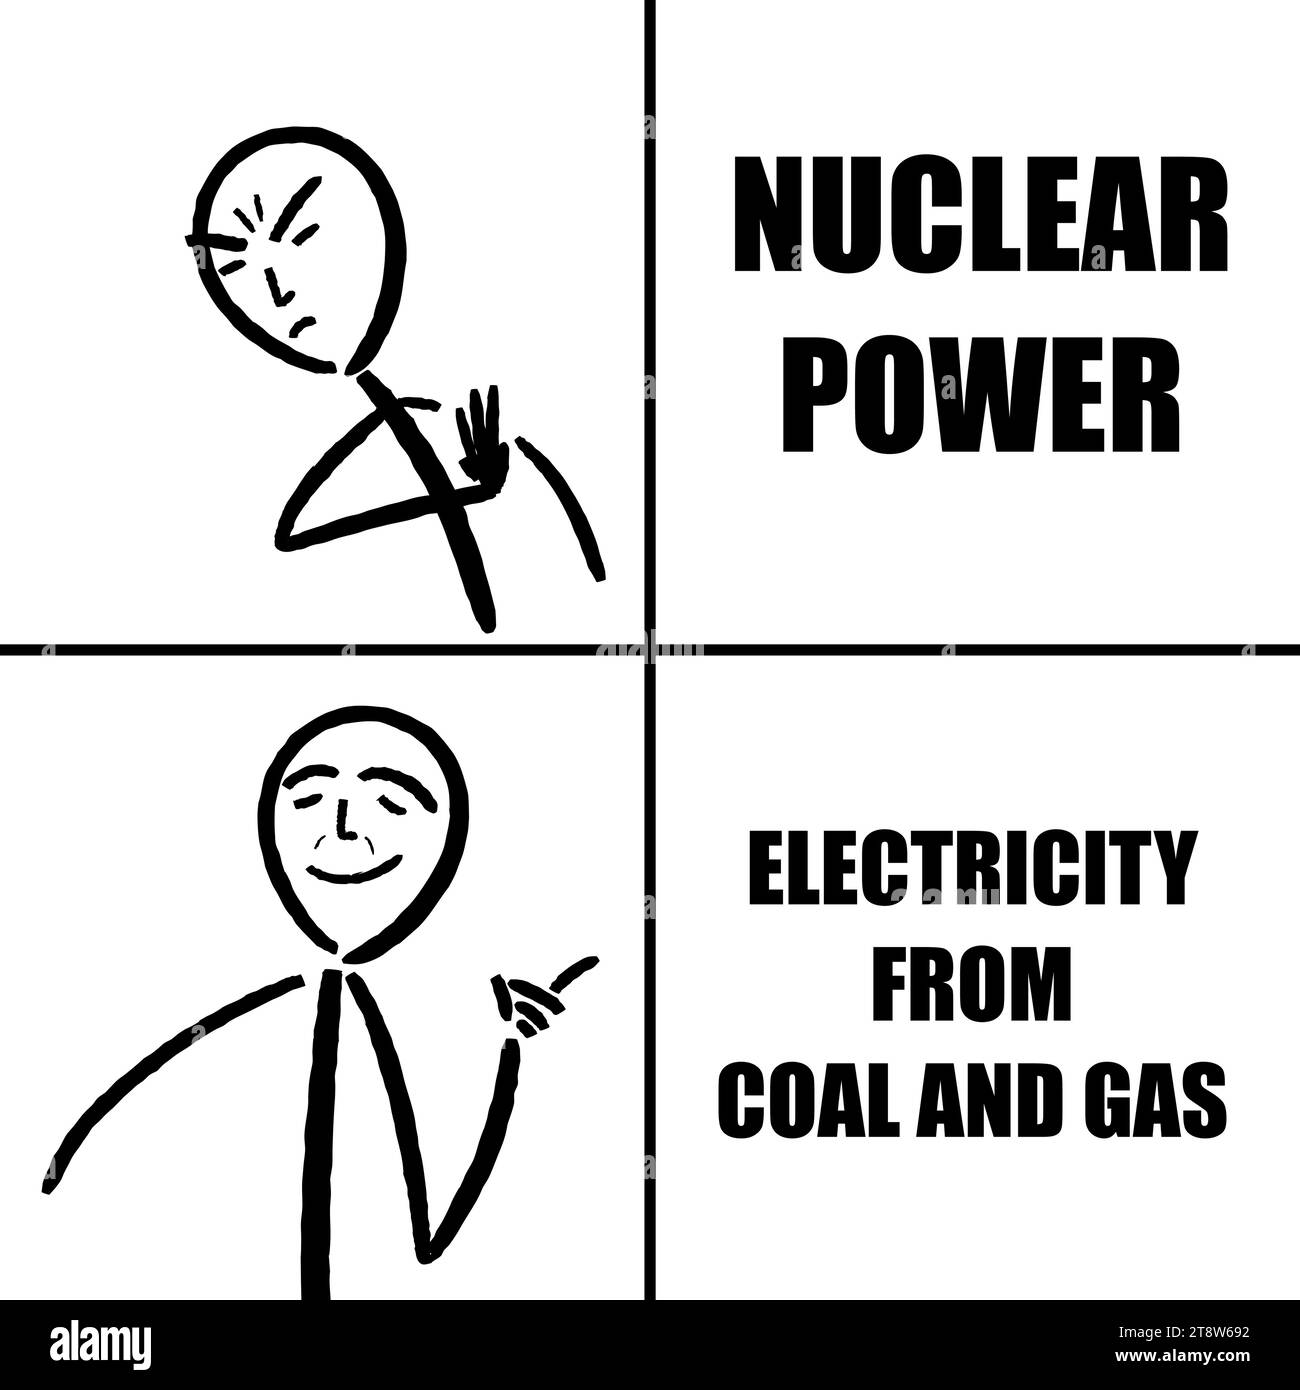 Nuclear power fears meme. Funny meme for social media sharing. Stock Vector